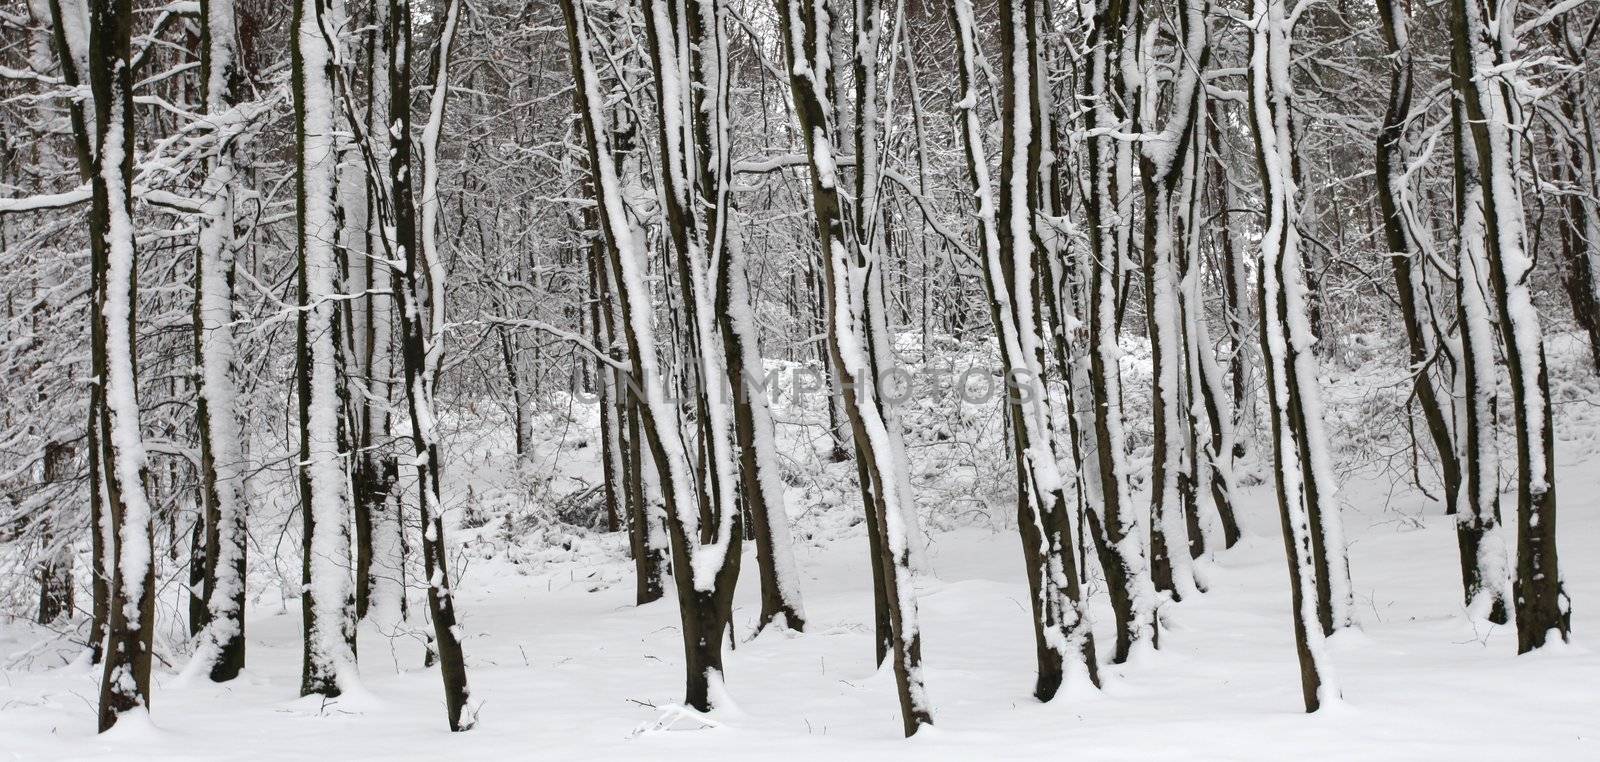 snow covered barren trees in winter UK